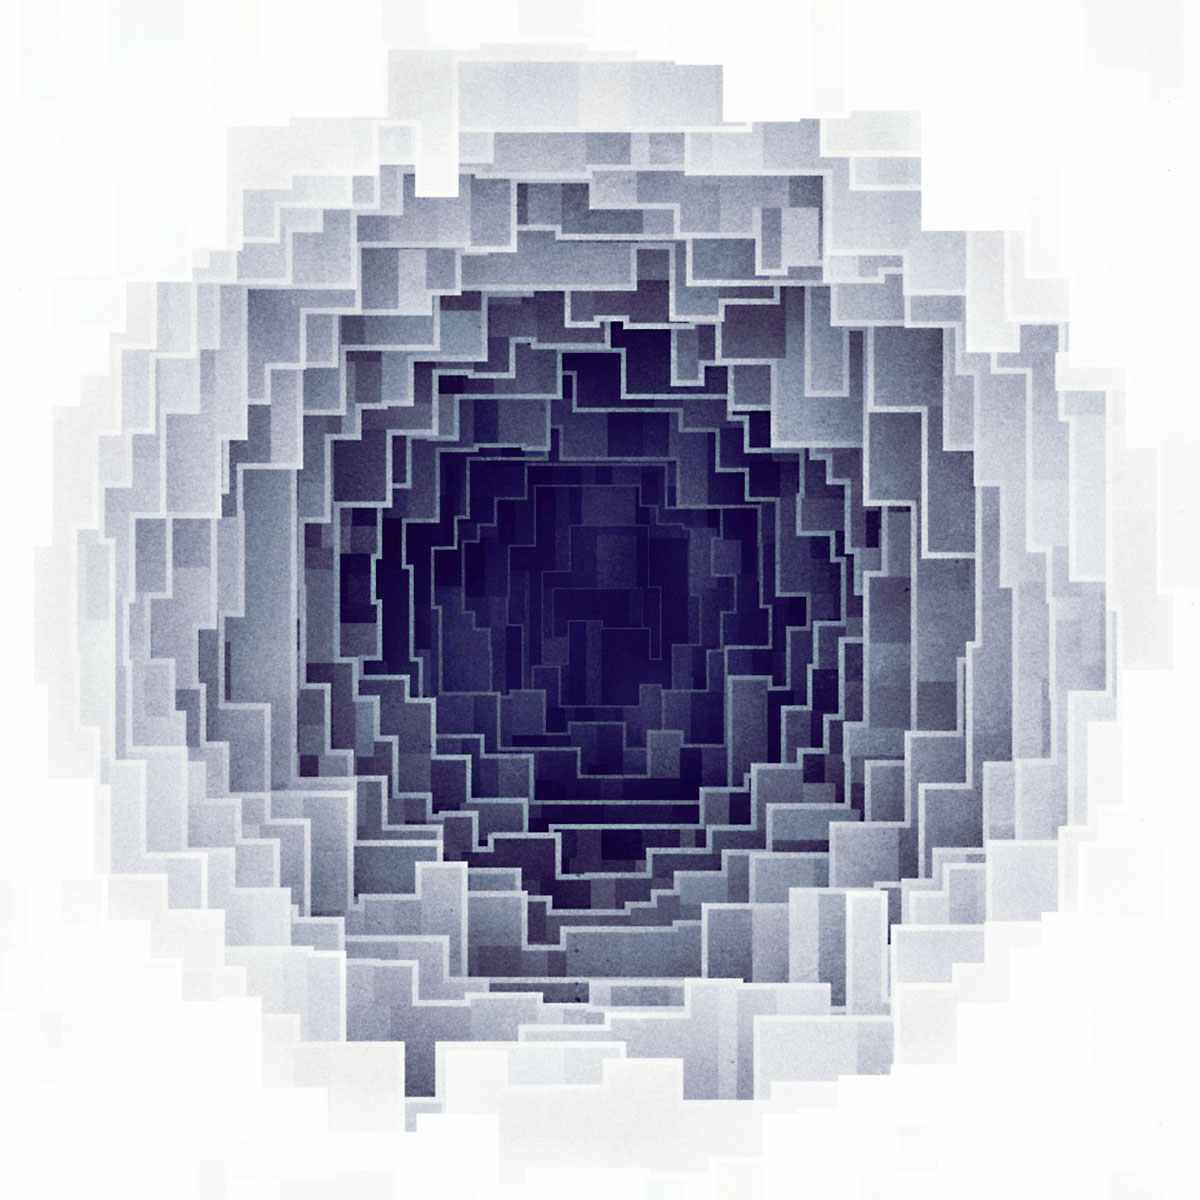 Pixel Hole